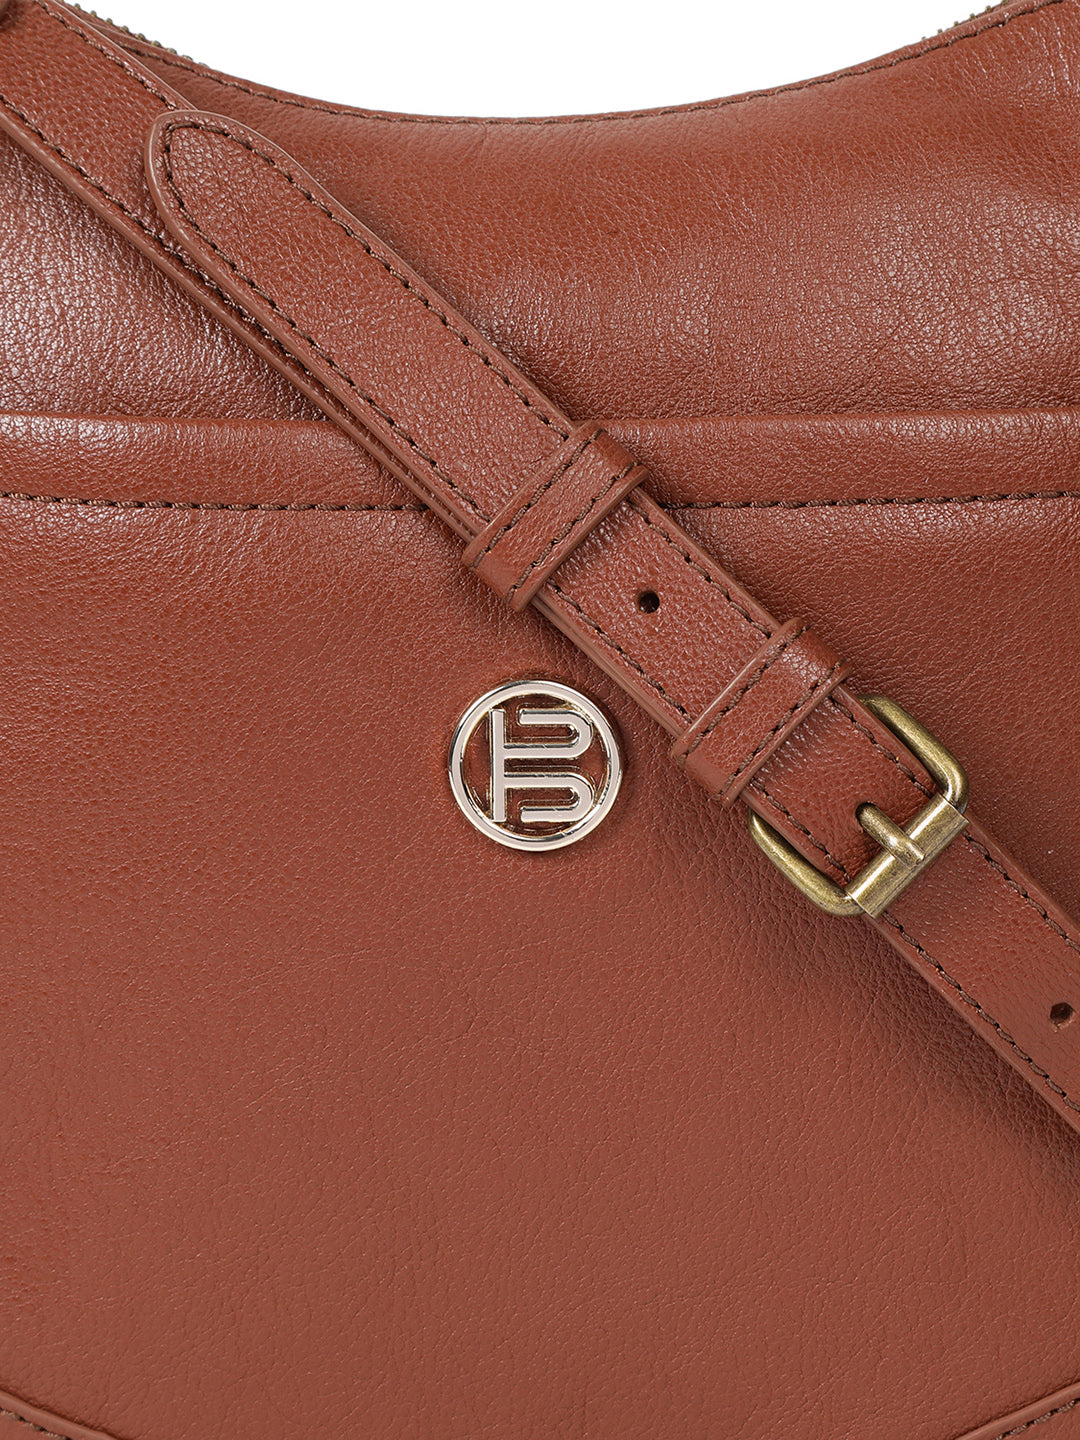 Campania Cognac Leather Cross Body Messenger Bag